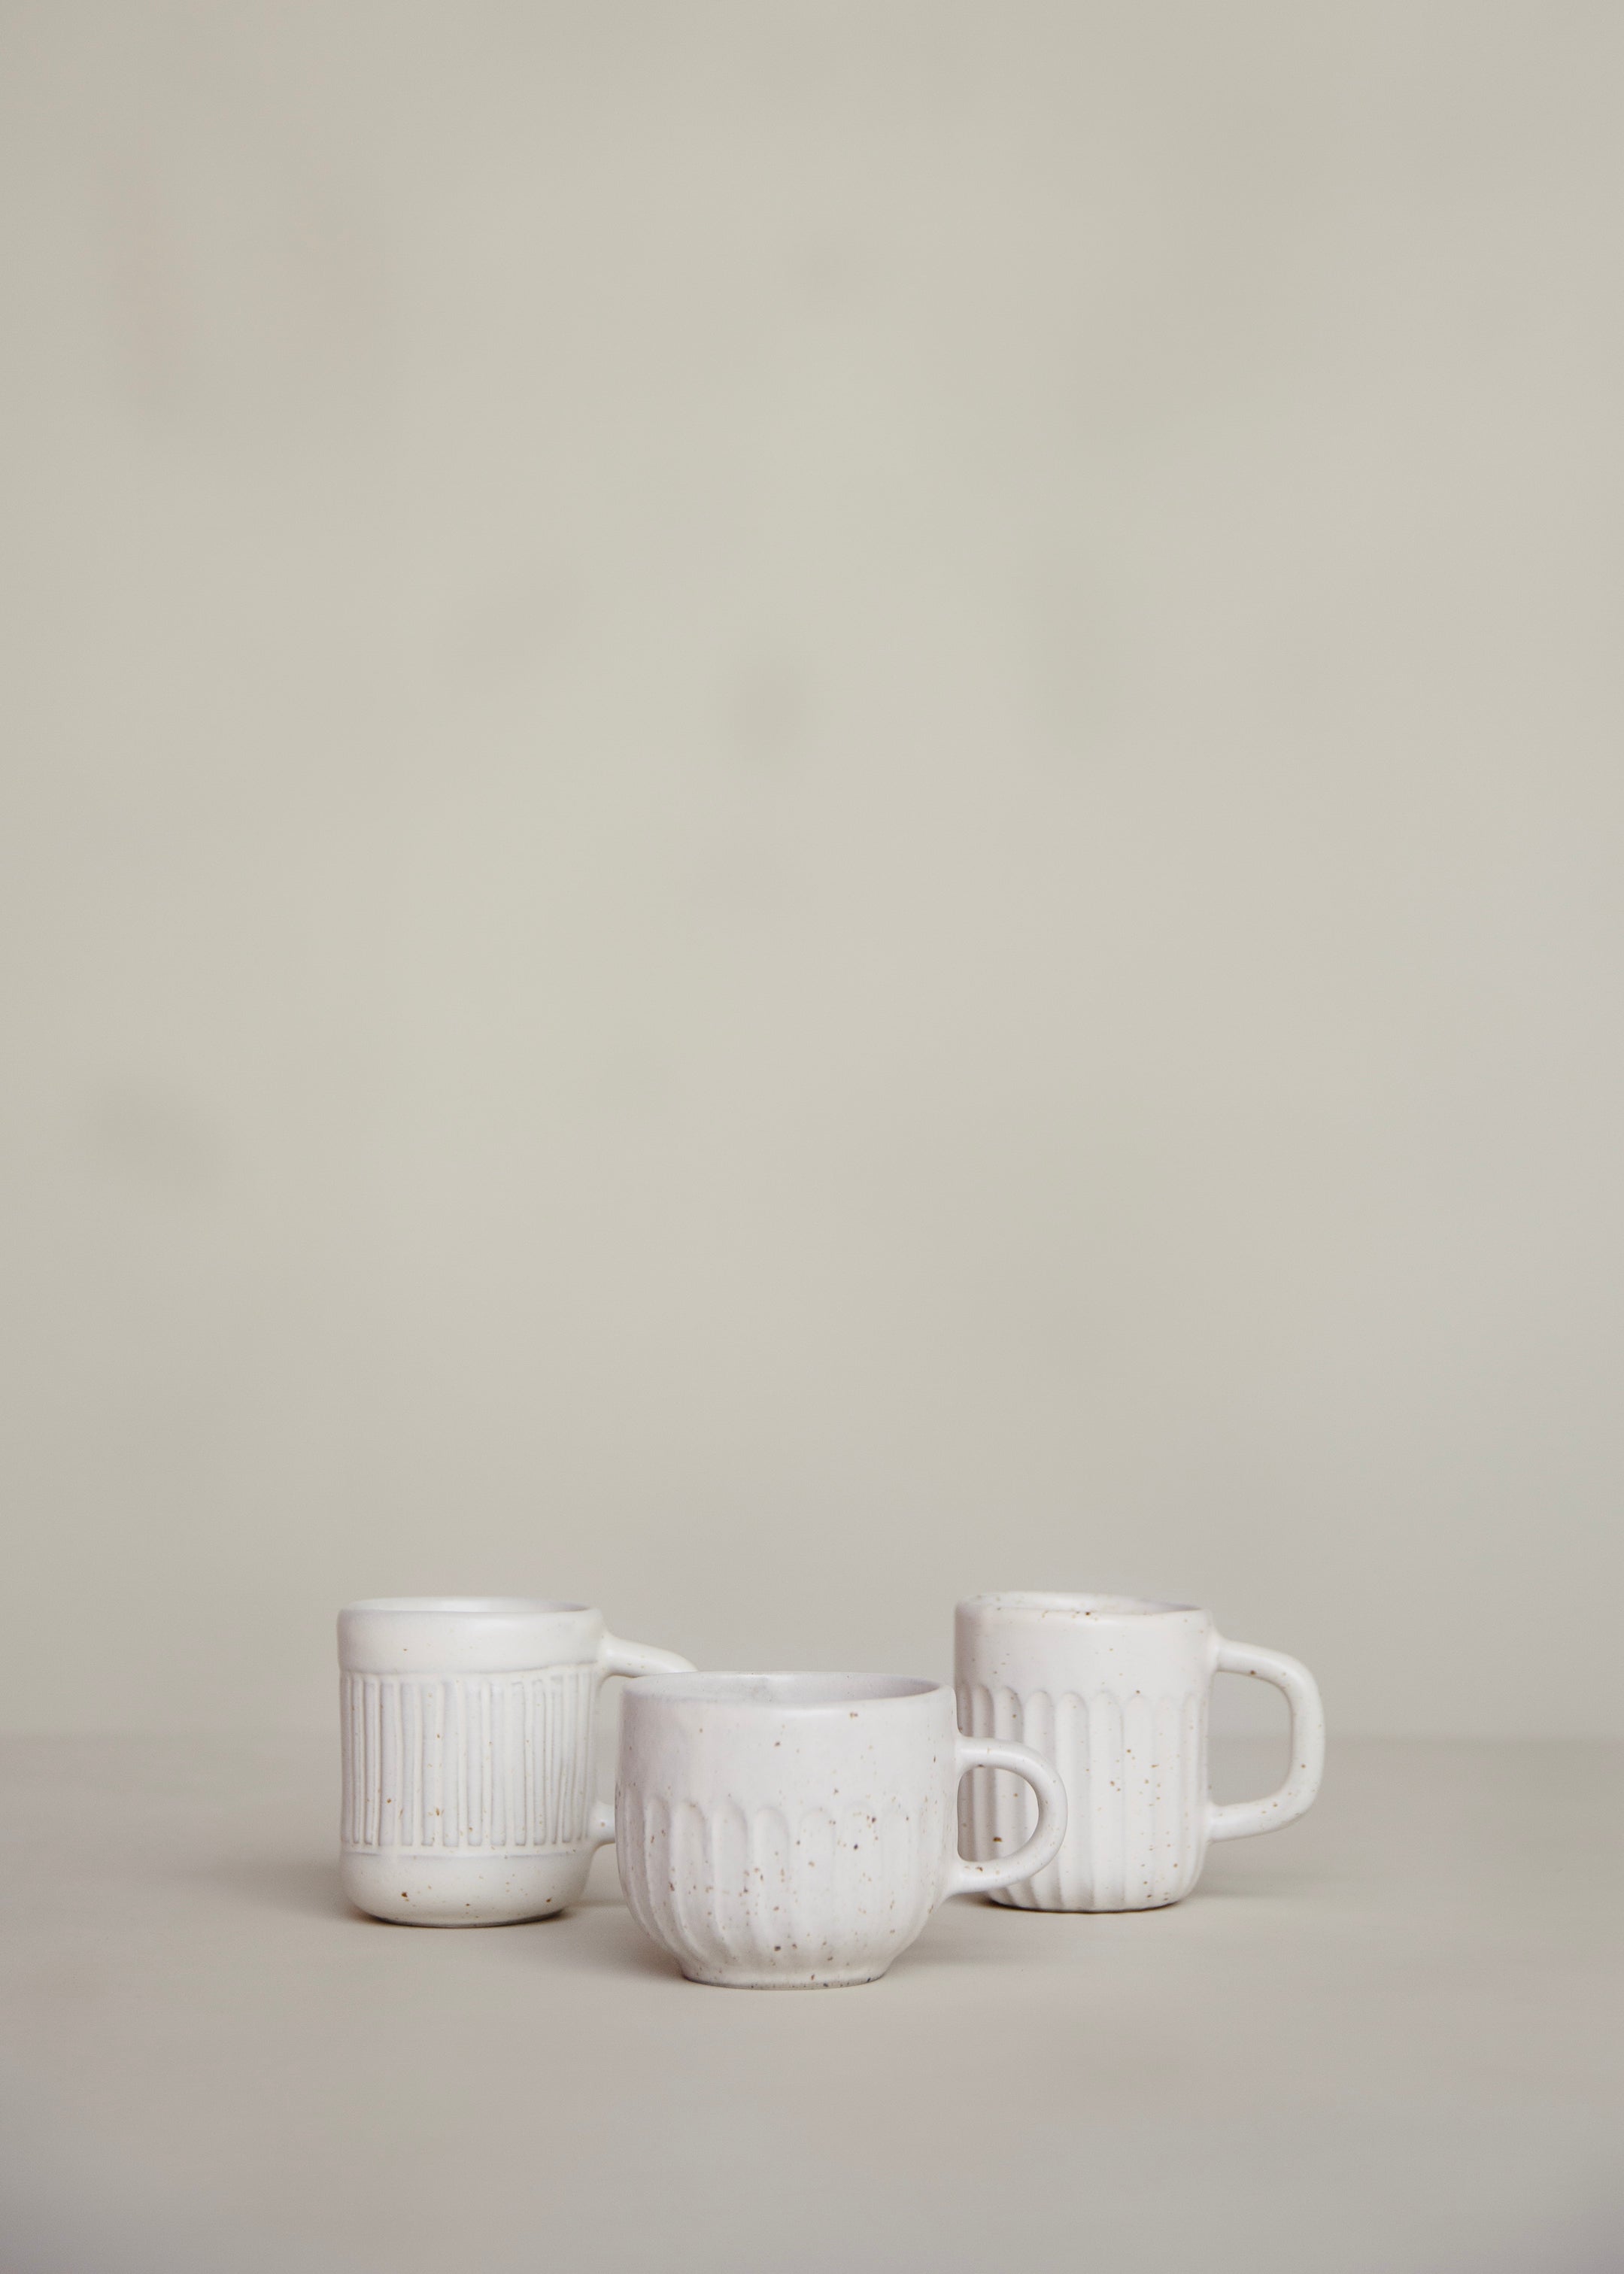 Meru Cup / Speckled White